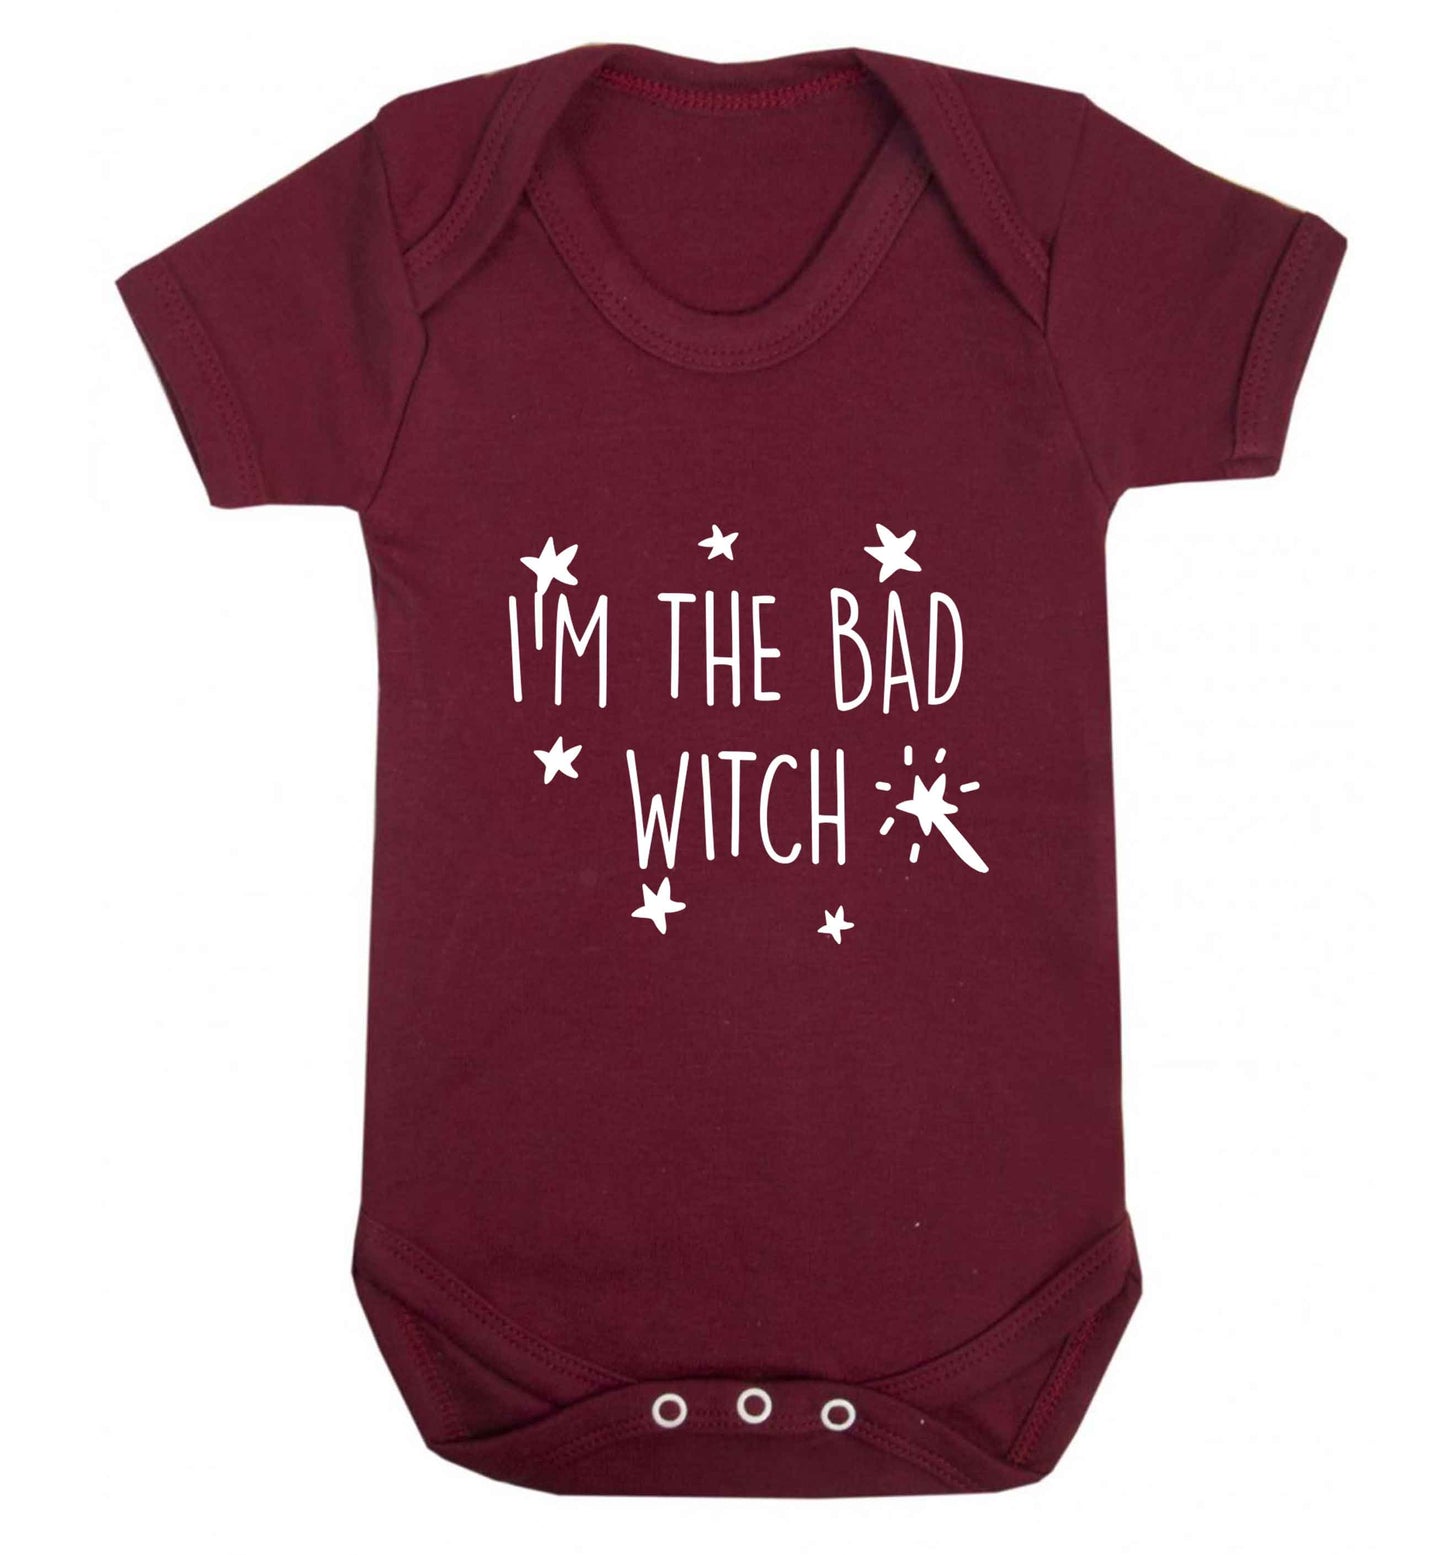 Bad witch baby vest maroon 18-24 months